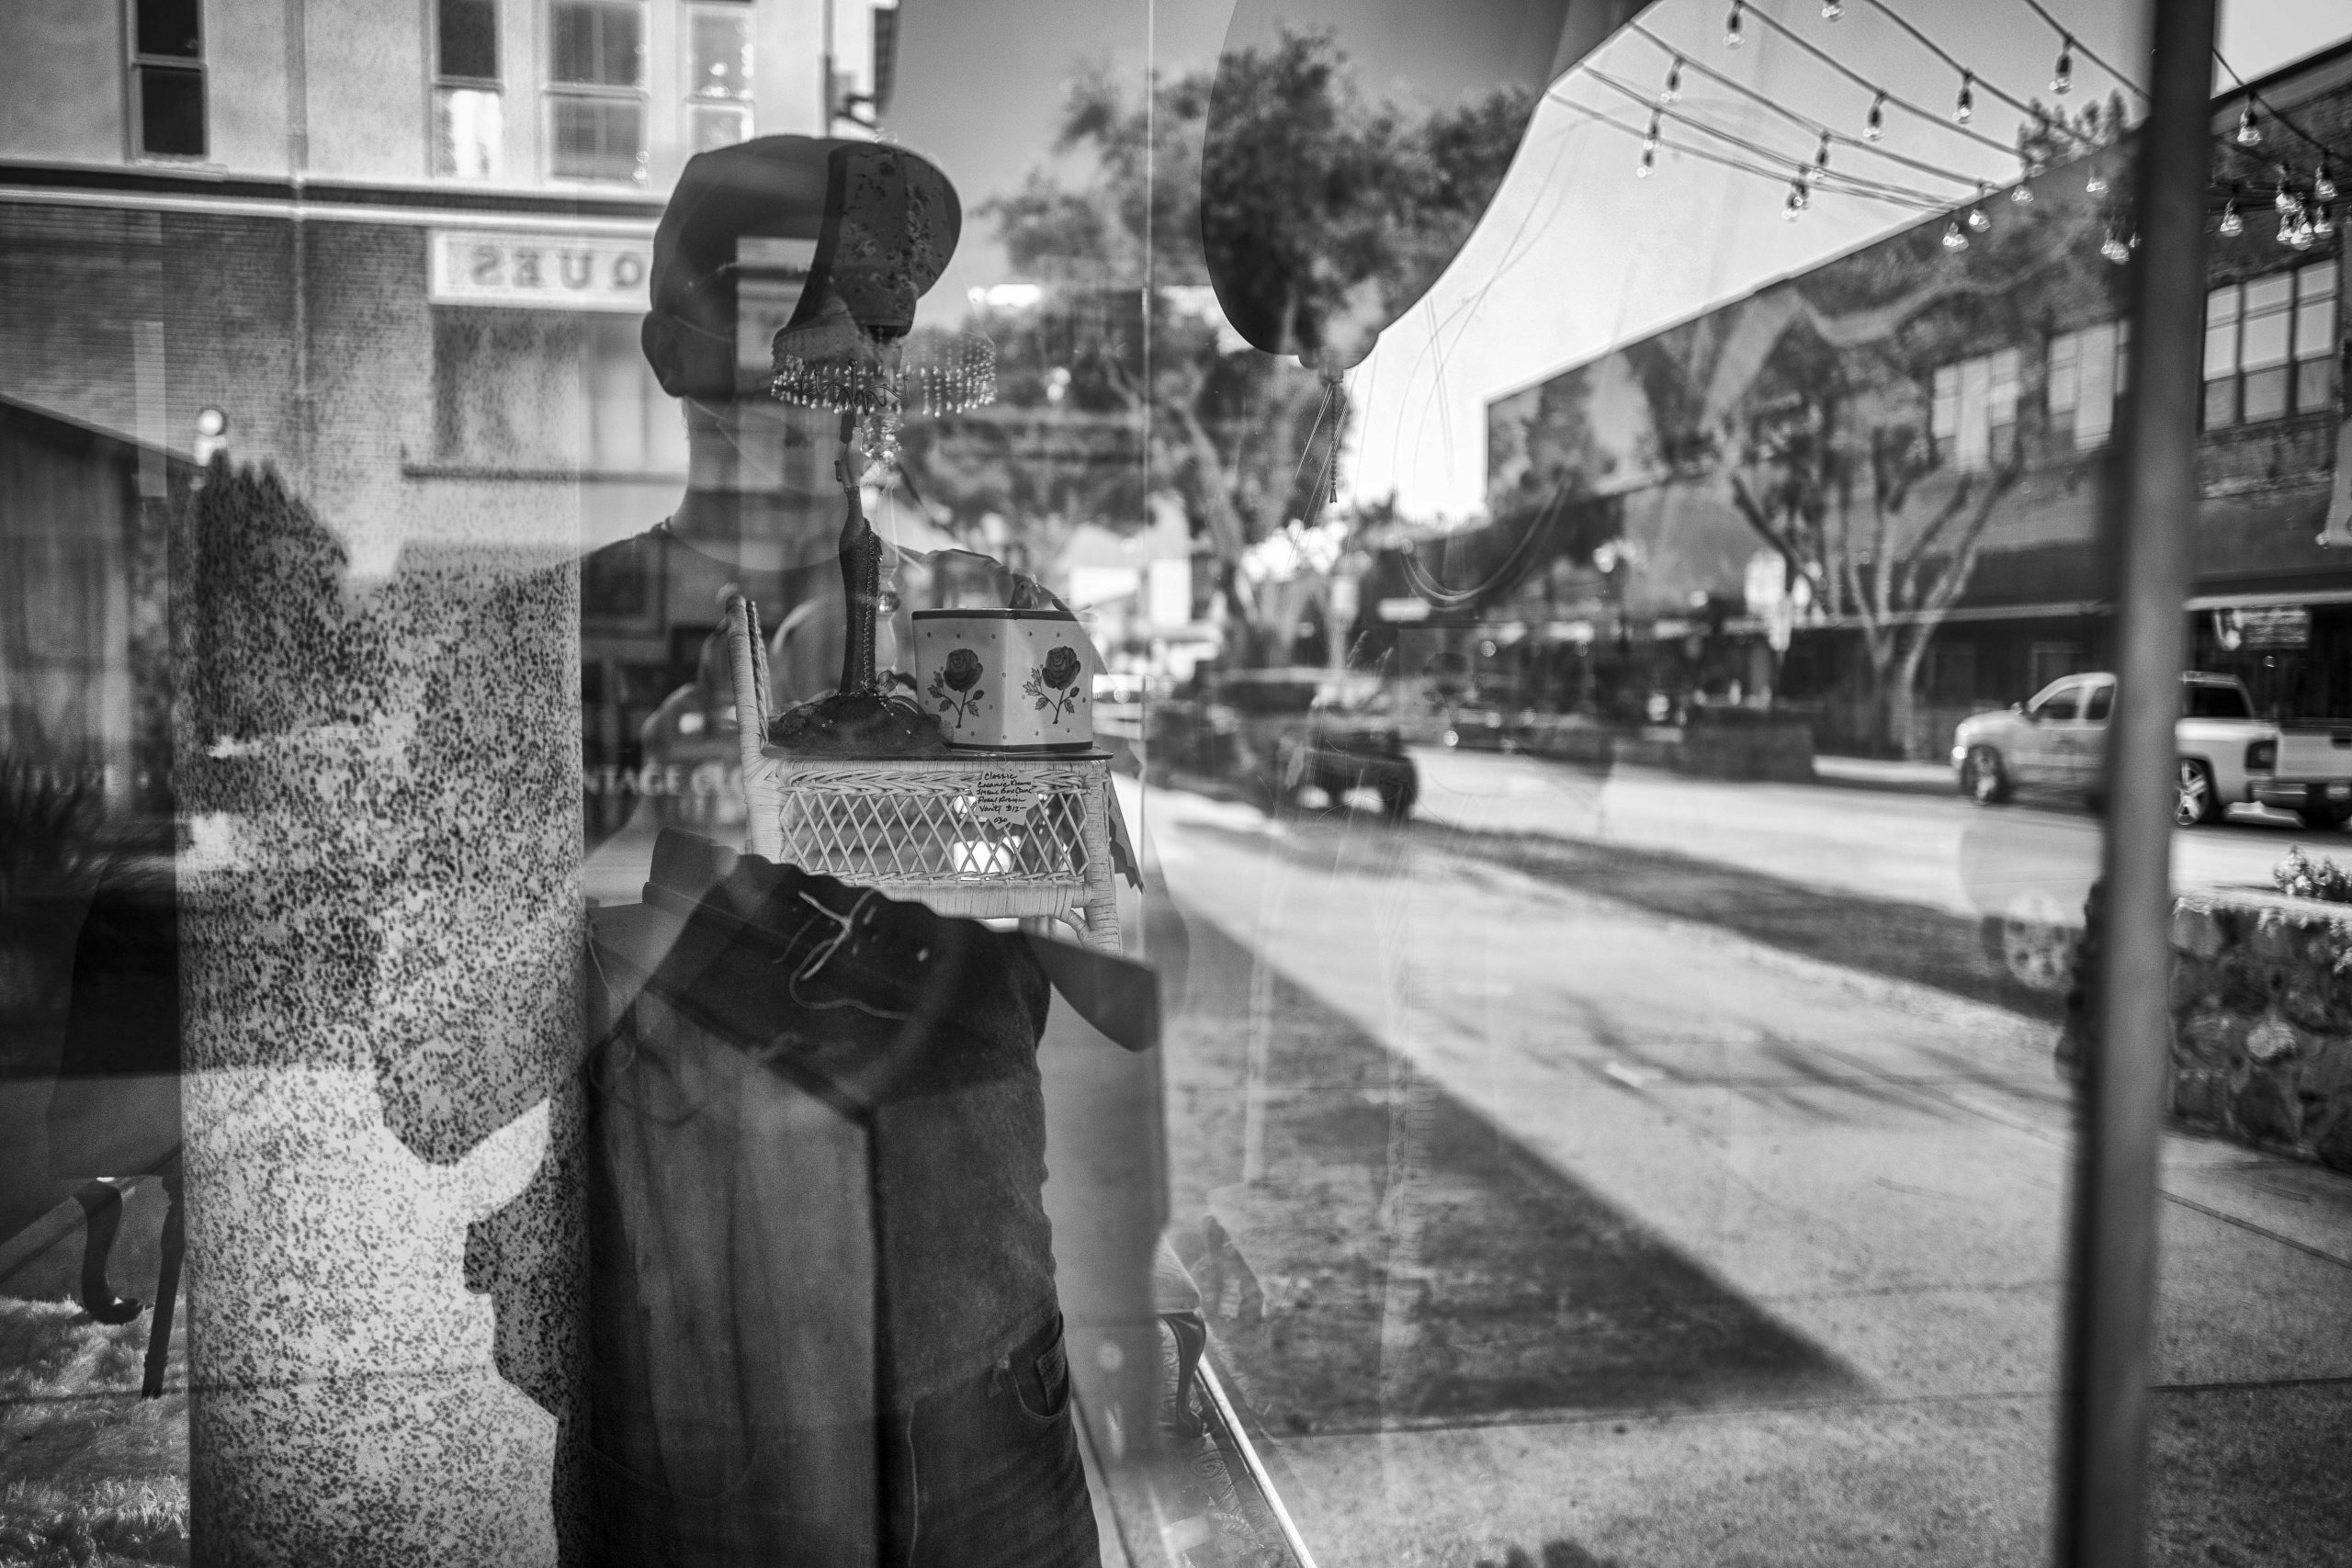 An image of Matt Lara, the photographer, reflected in a window pane.